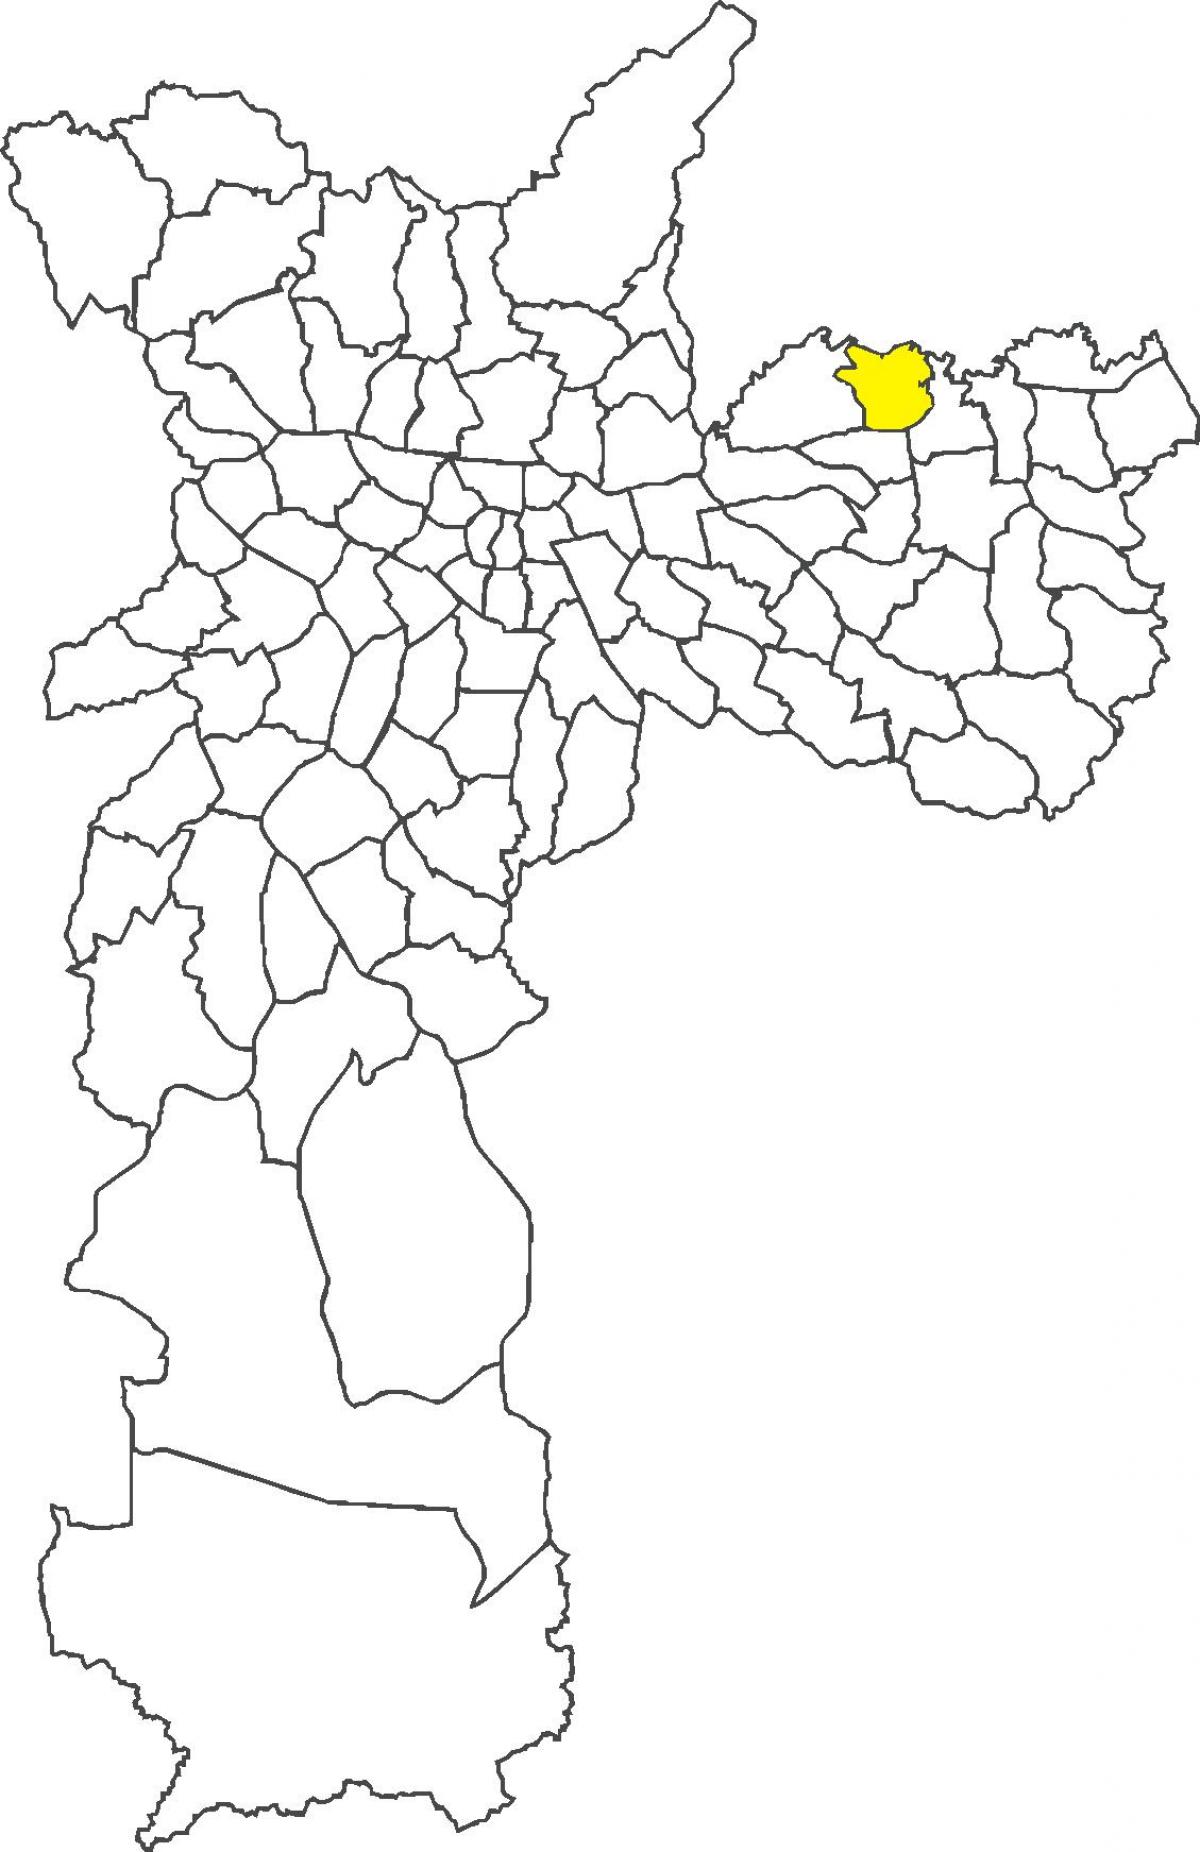 Mapa d'Ermelino Matarazzo districte